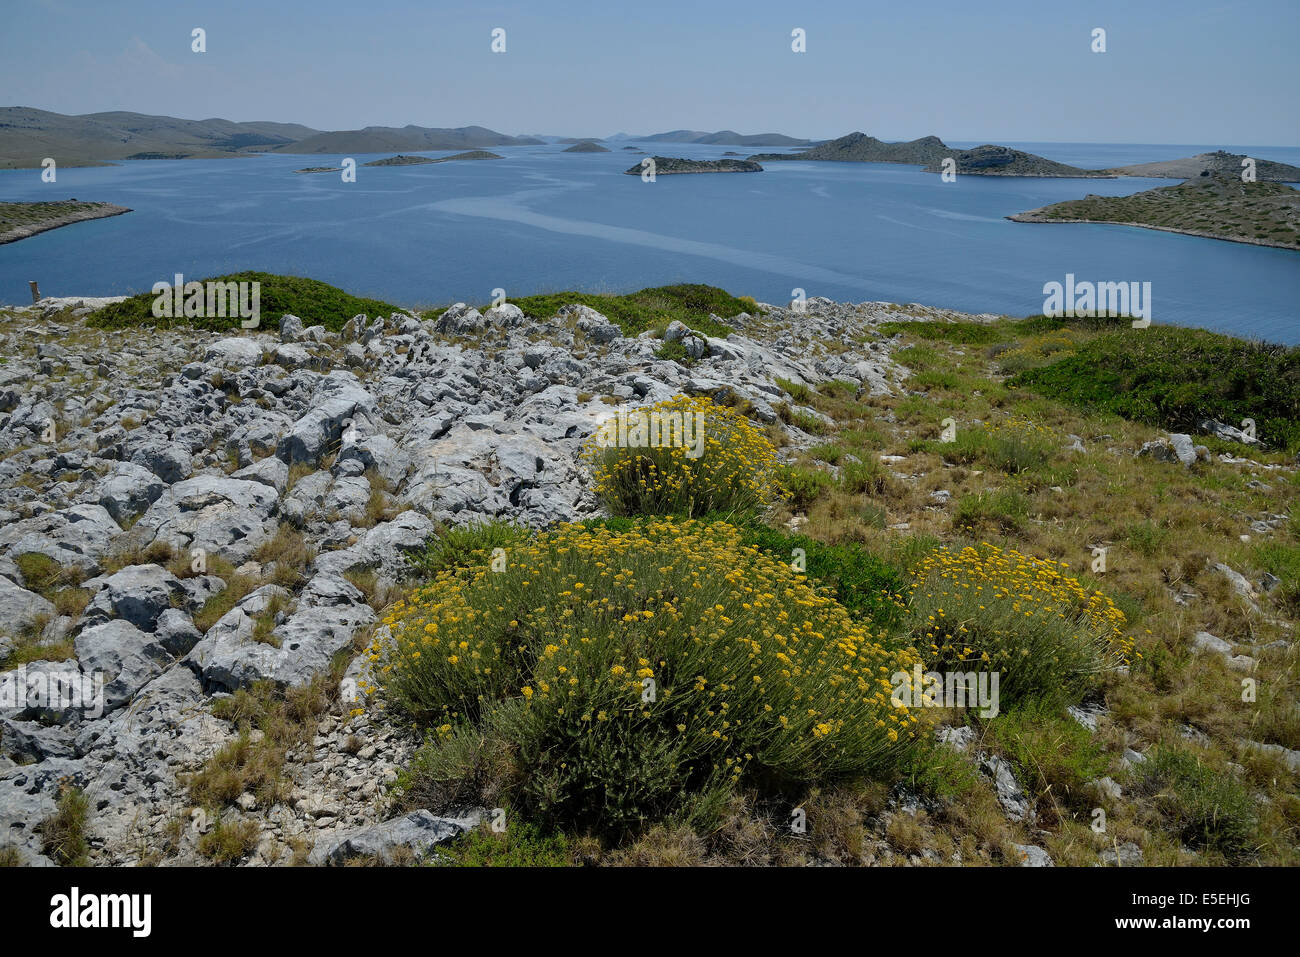 View from Levrnaka island over the Kornati Islands, Adriatic Sea, Kornati Islands National Park, Croatia Stock Photo